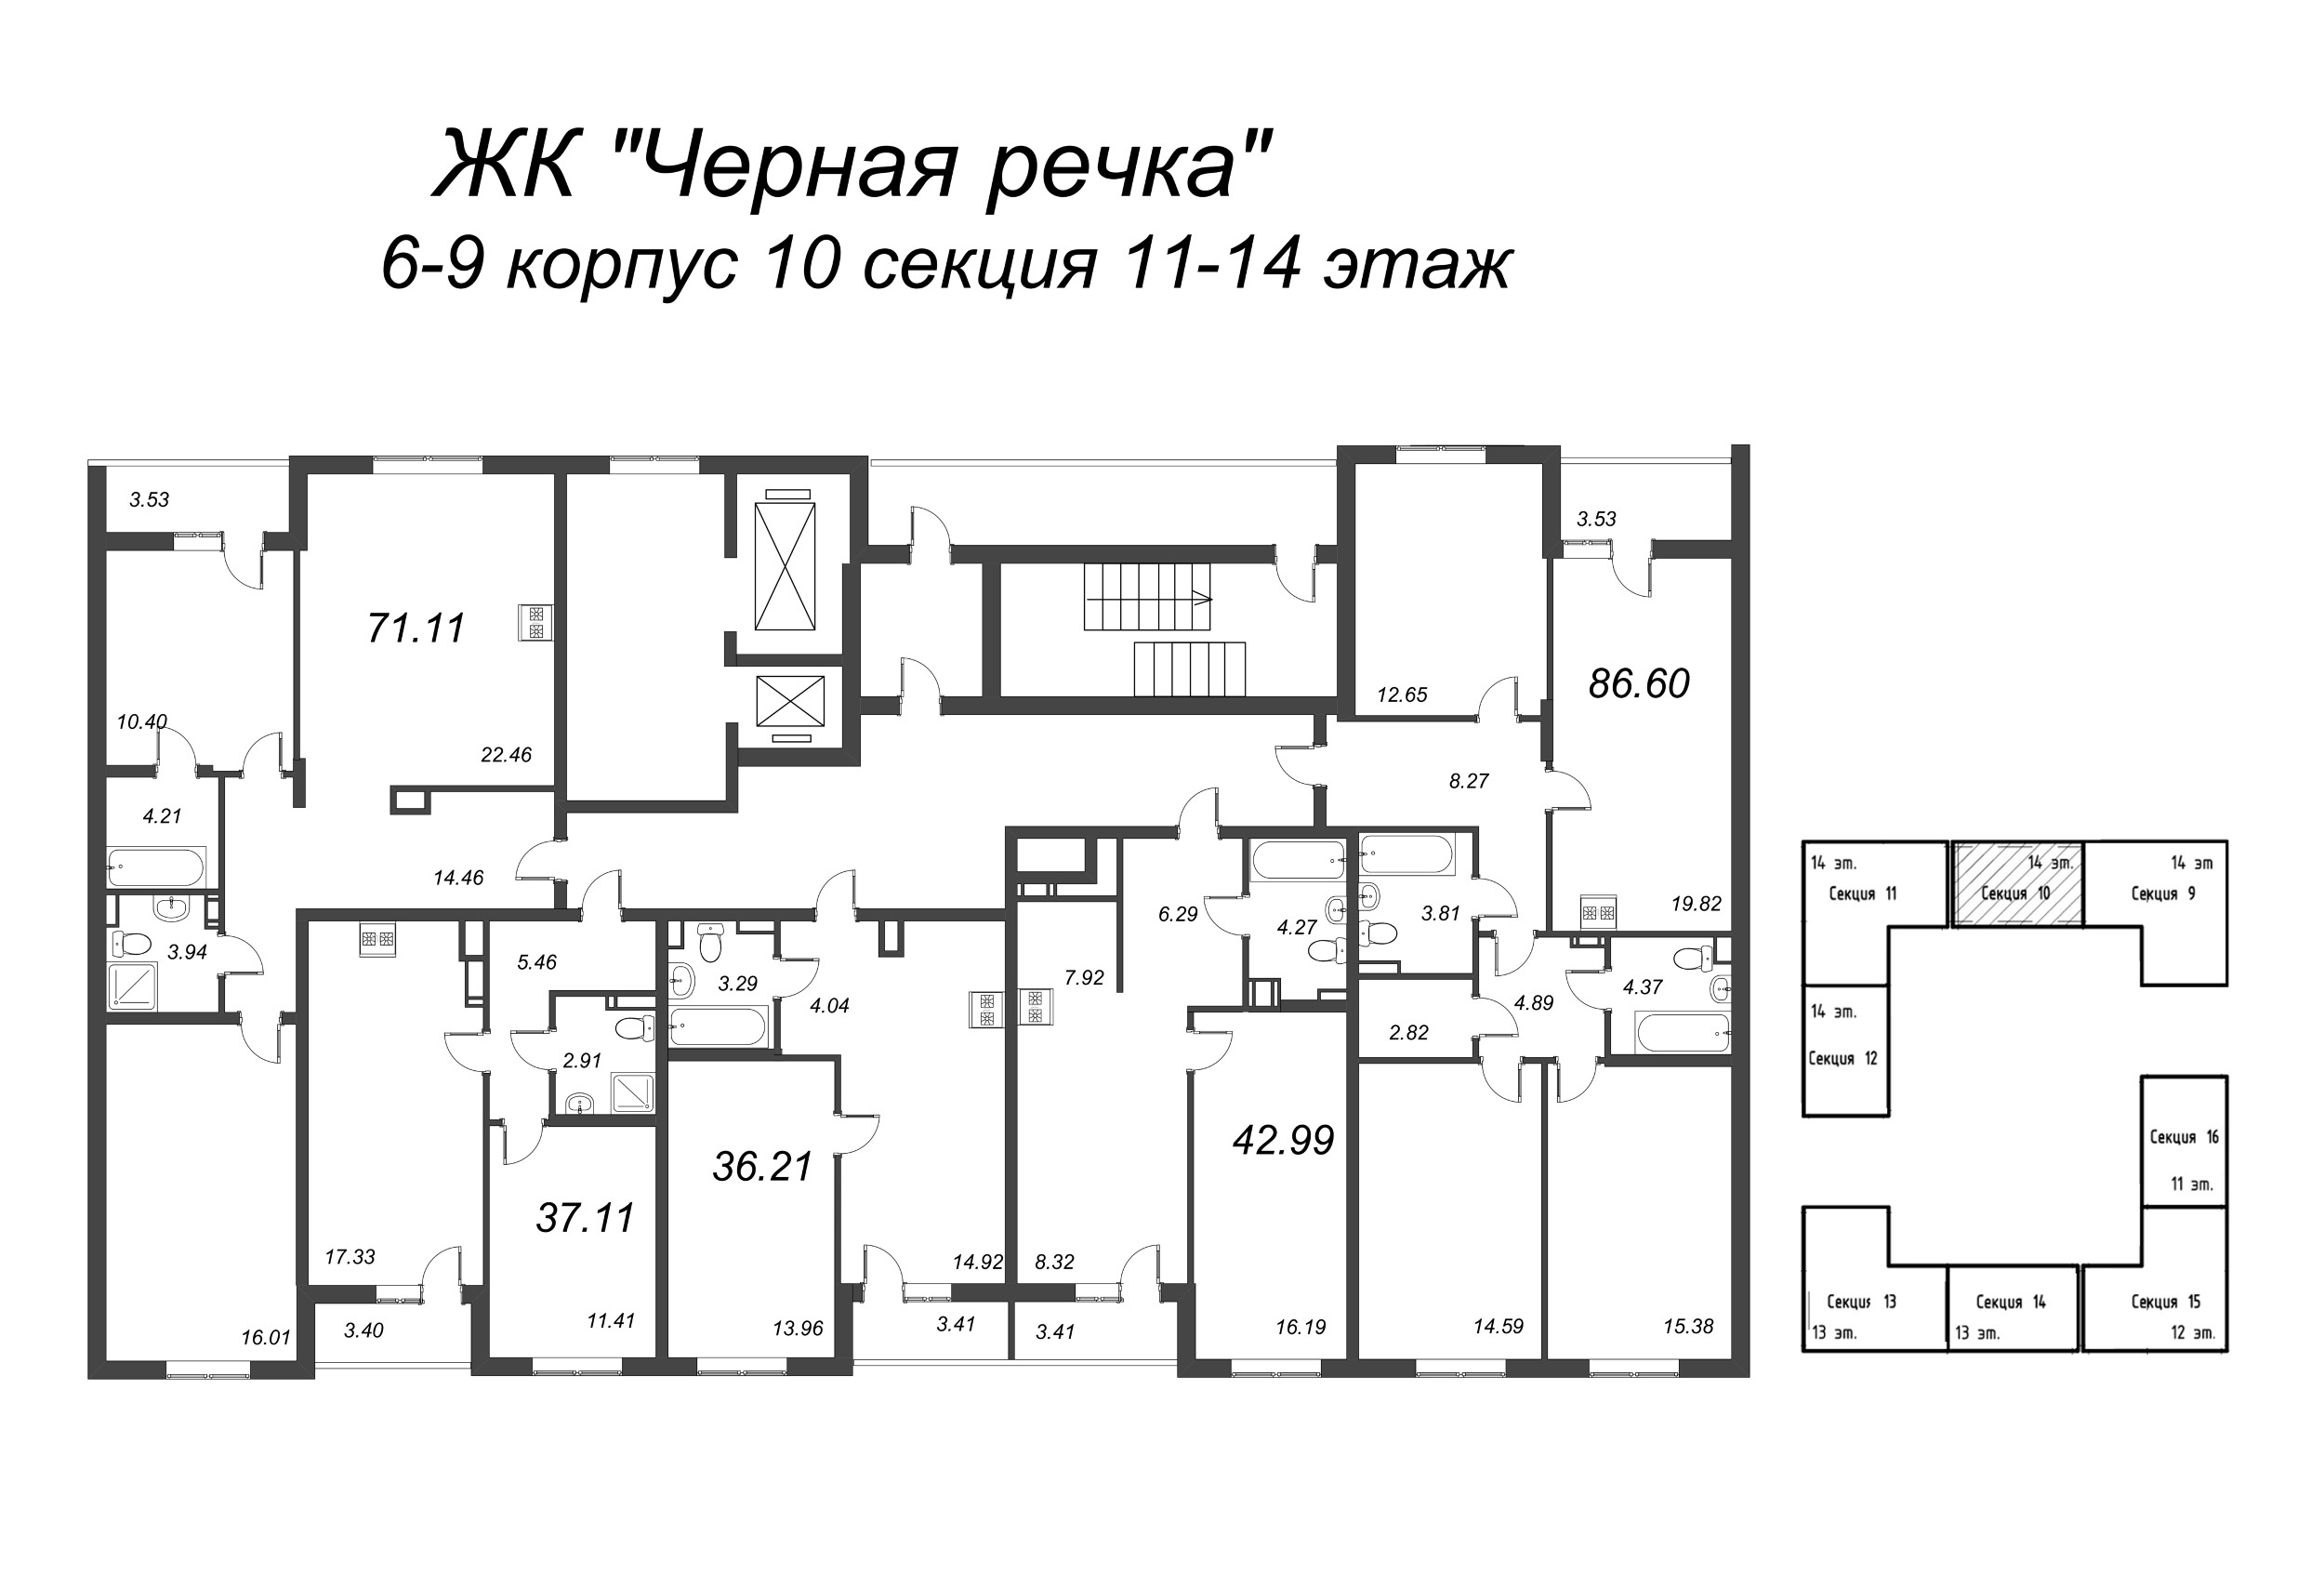 3-комнатная (Евро) квартира, 67.46 м² - планировка этажа